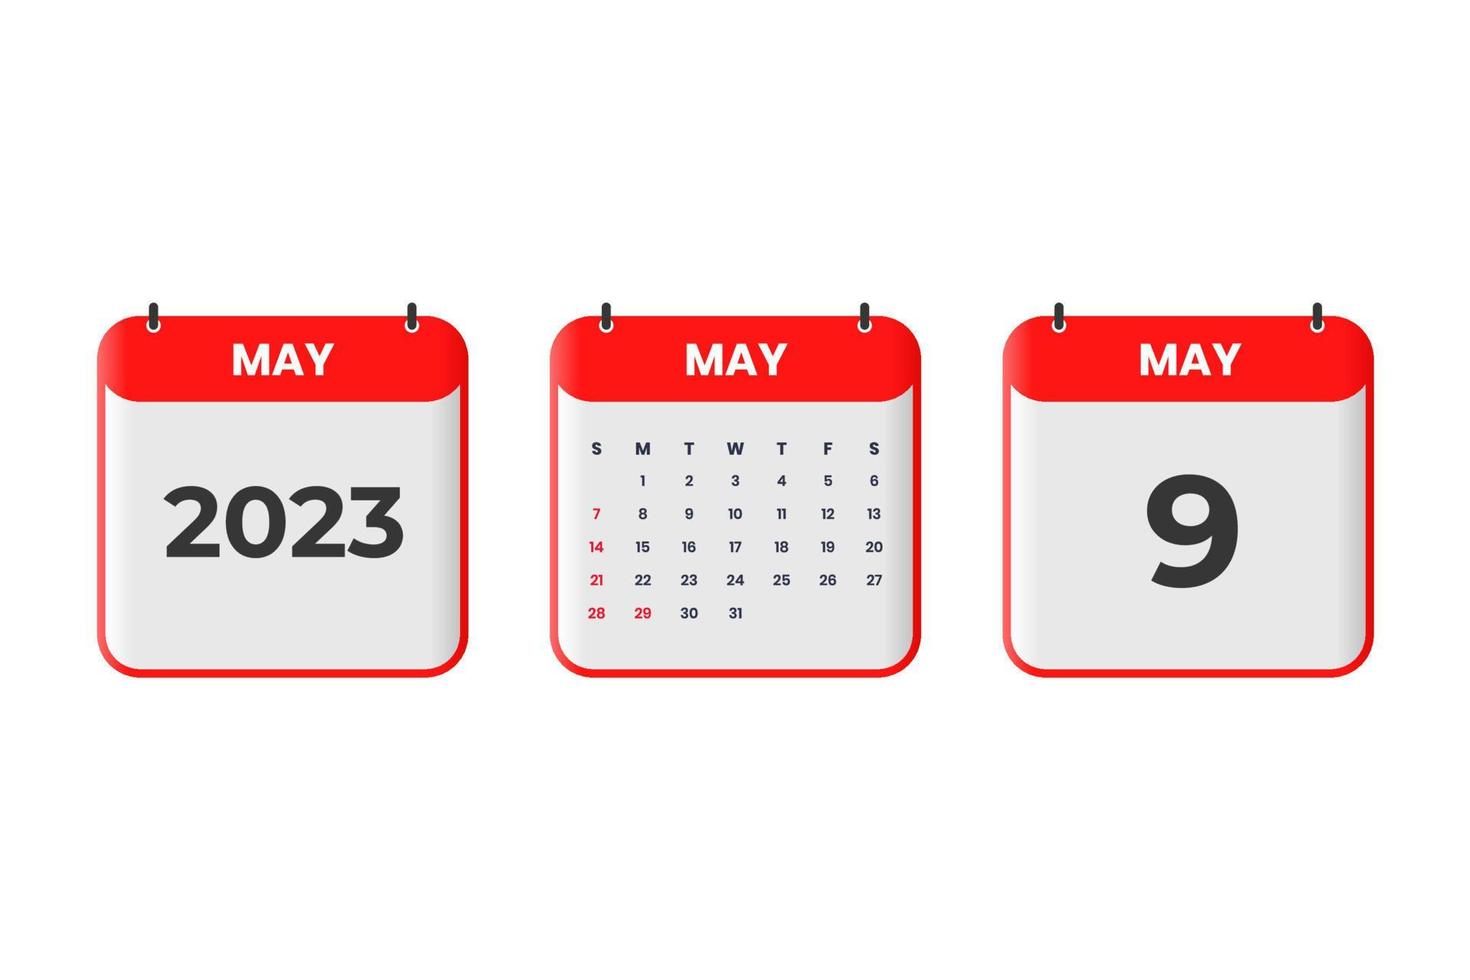 diseño de calendario de mayo de 2023. 9 de mayo de 2023 icono de calendario para horario, cita, concepto de fecha importante vector